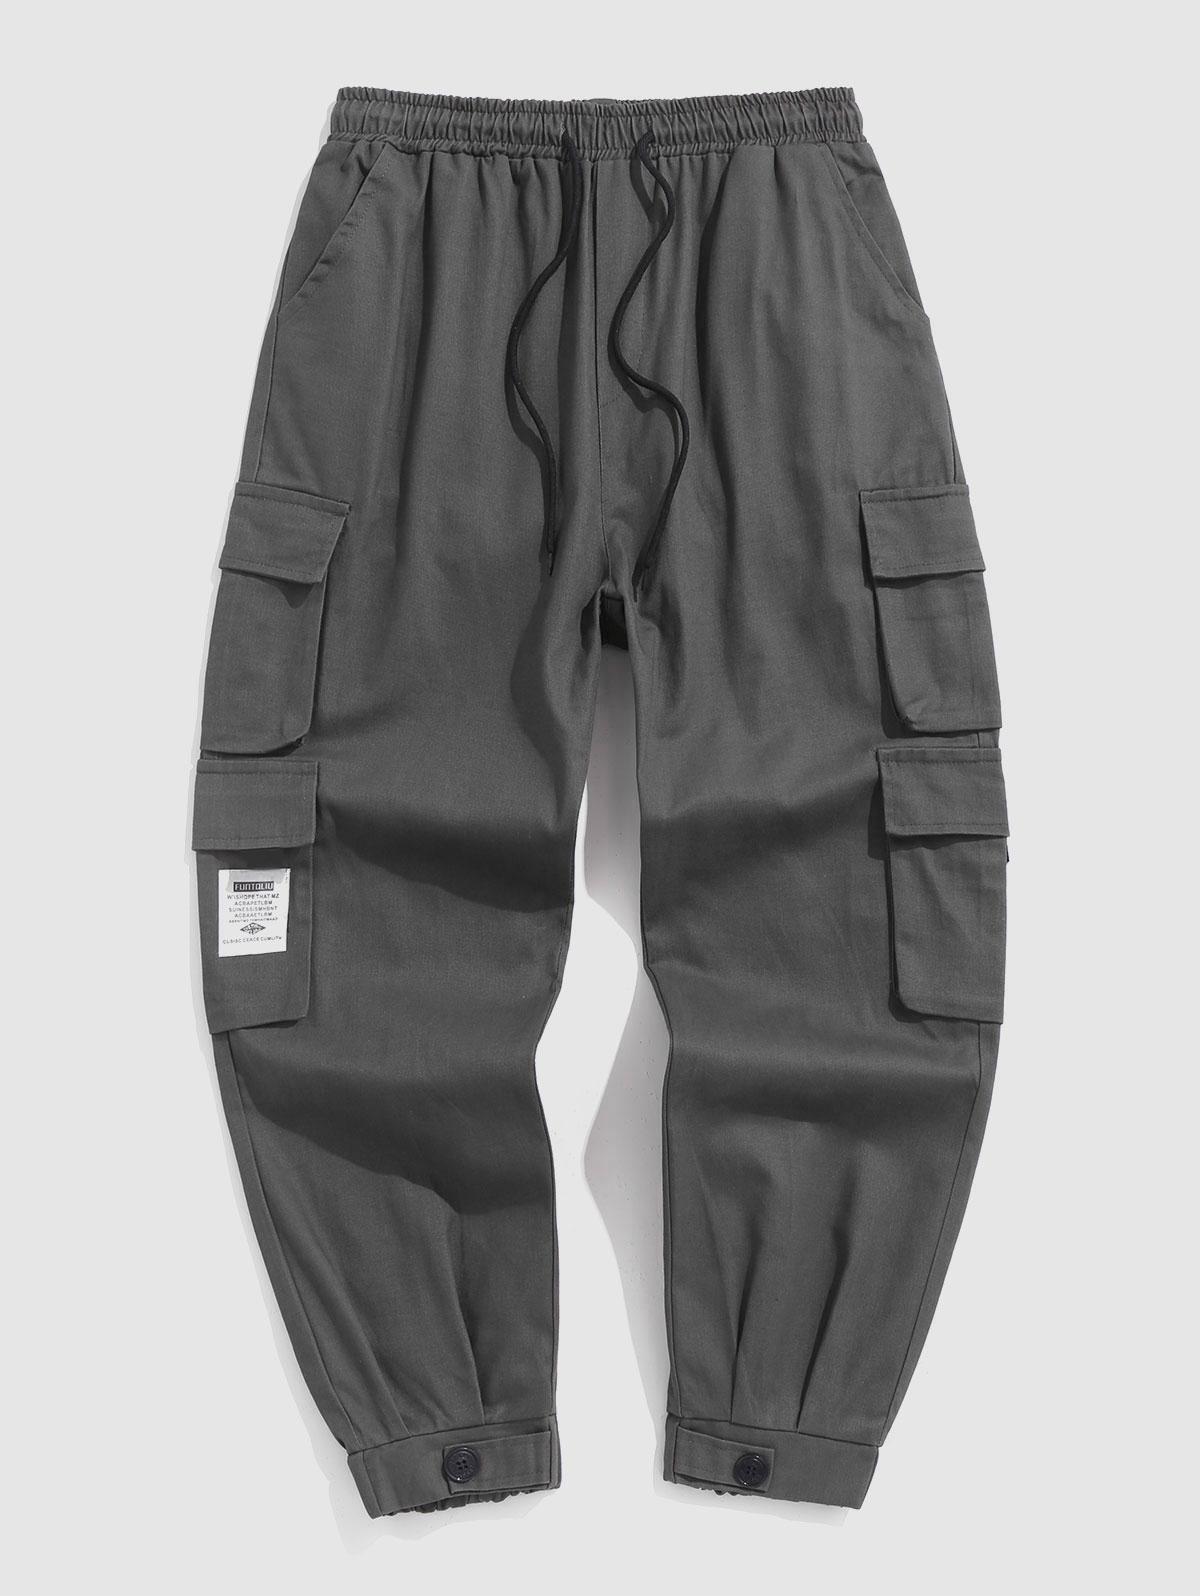 ZAFUL Men's Multi-pockets Patched Design Streetwear Cargo Pants L Gray